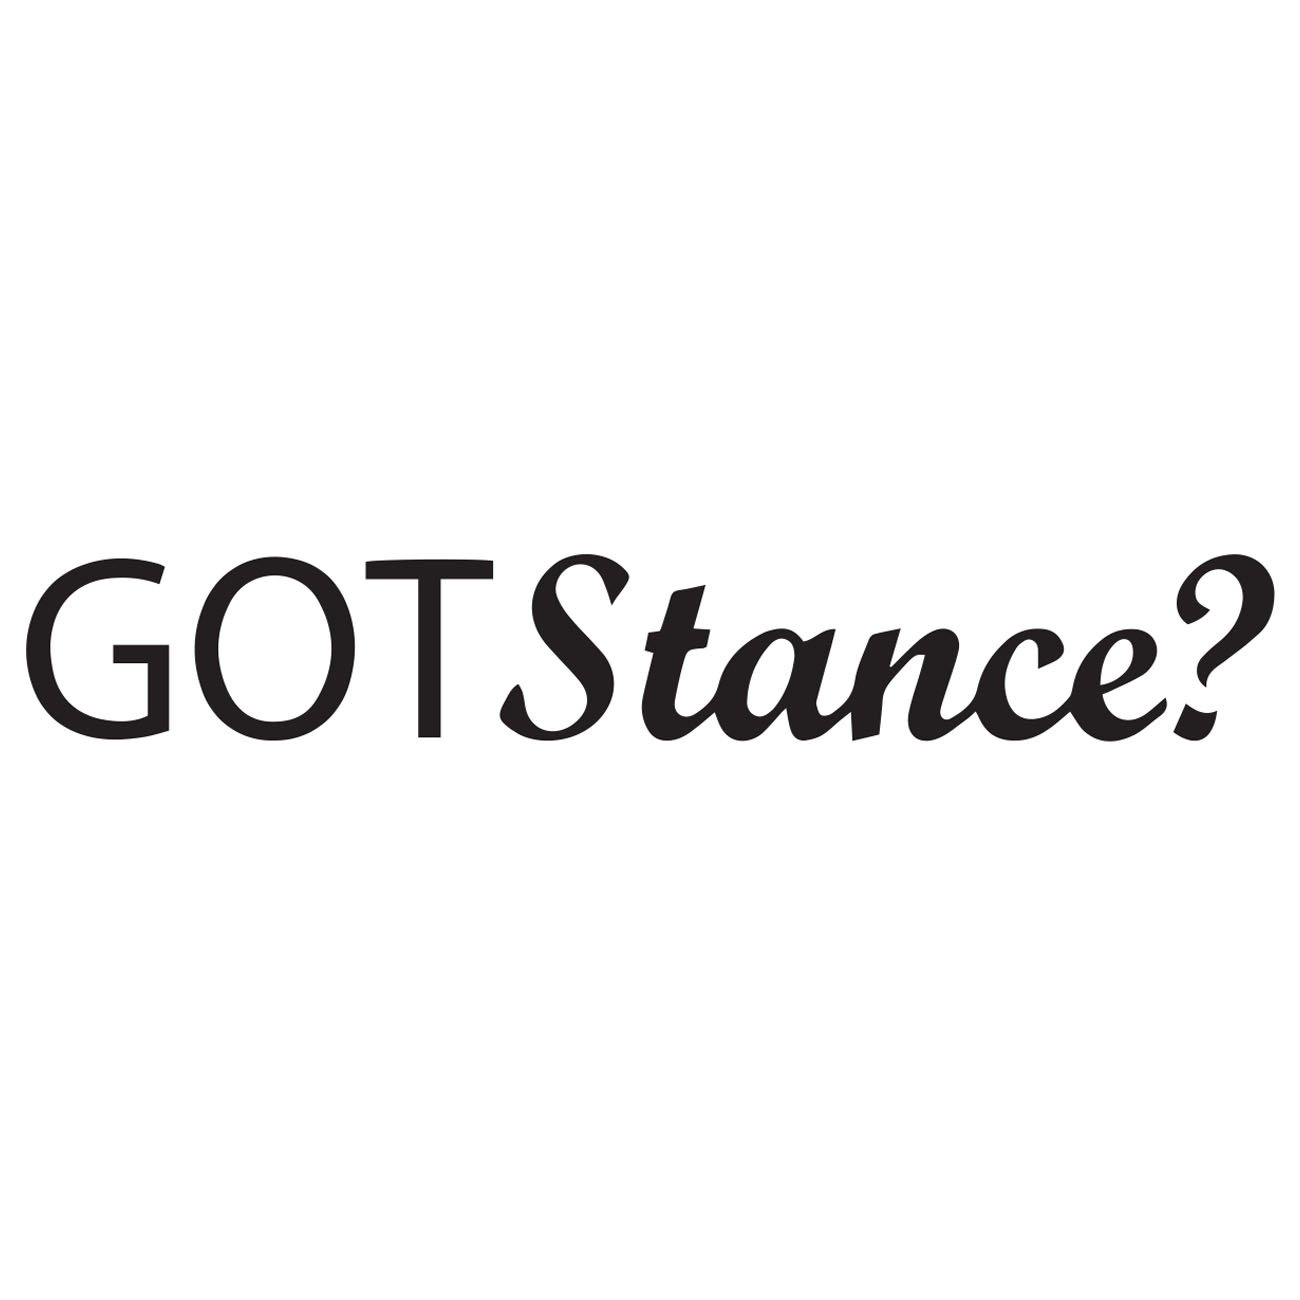 Got stance?